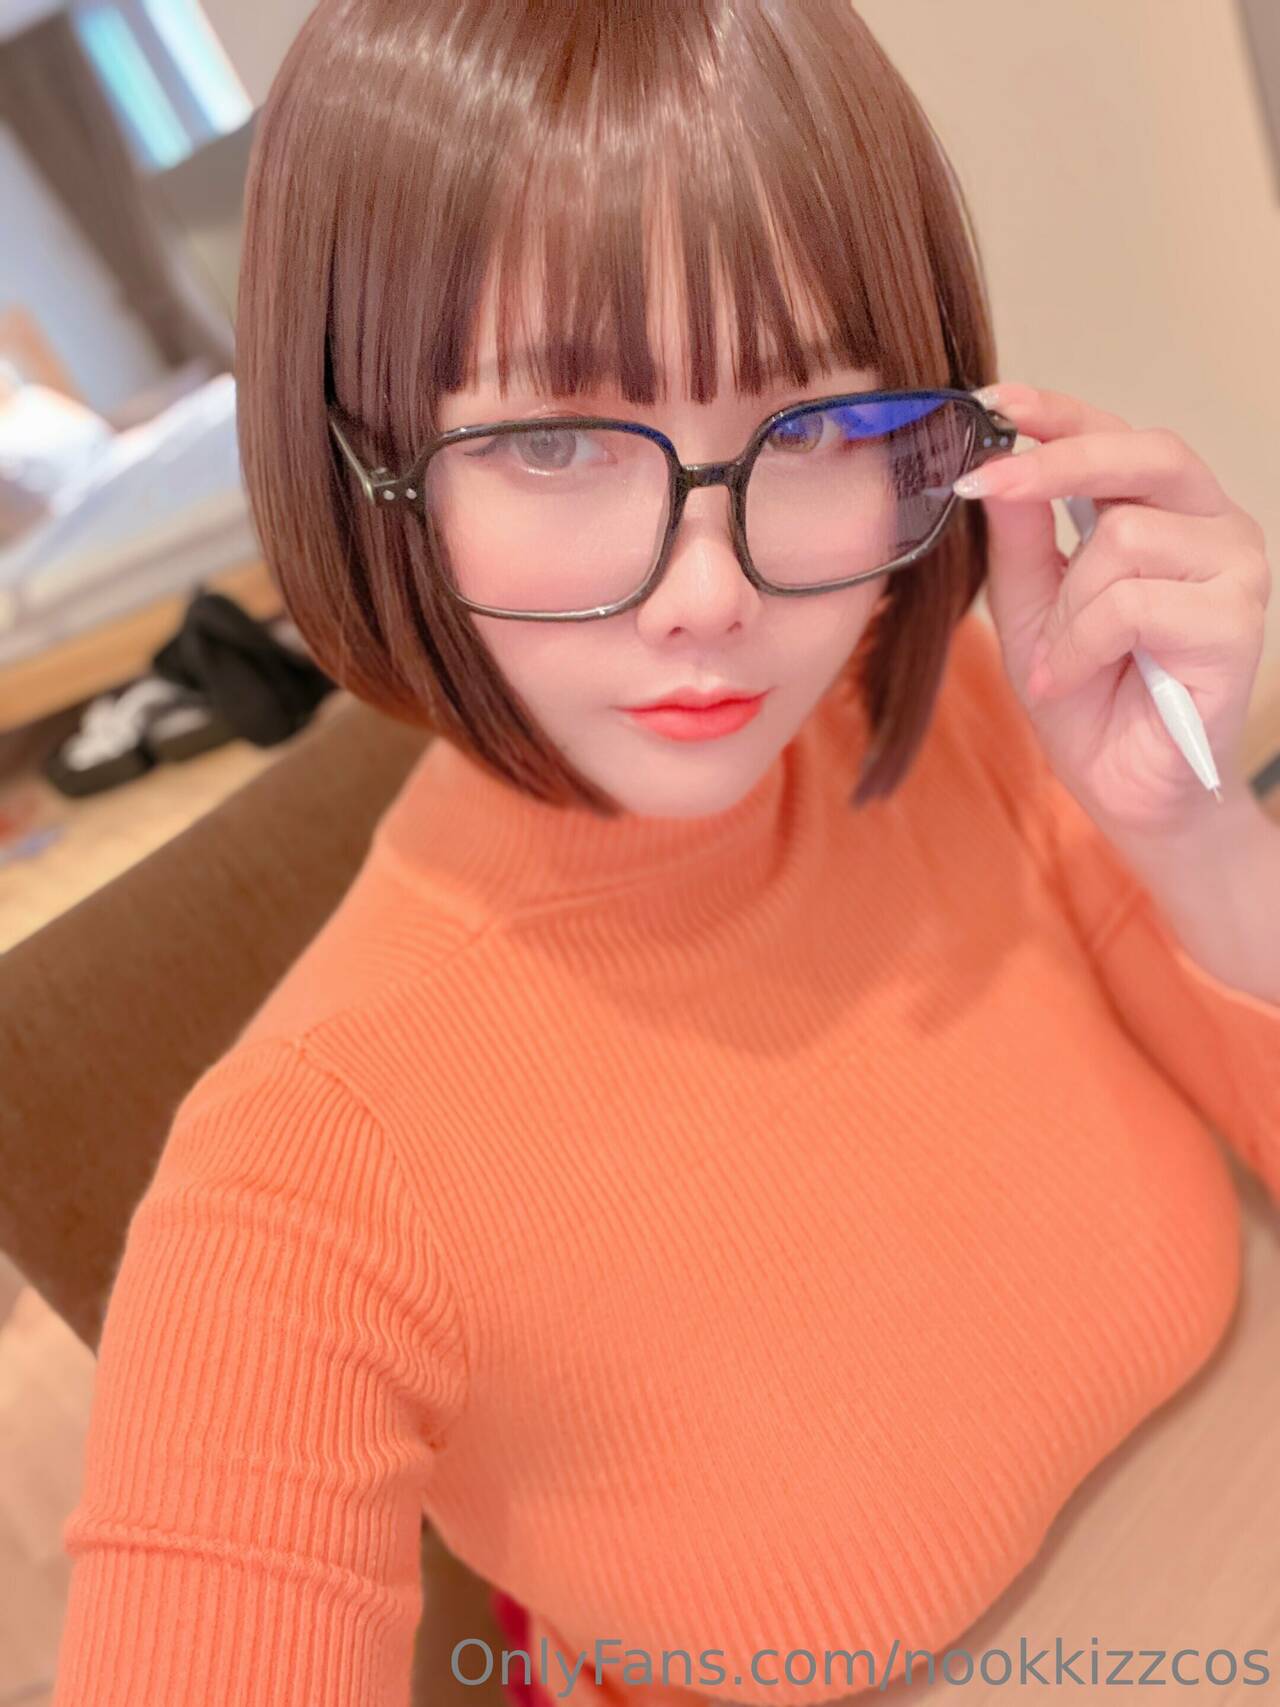 Nookkiizz – Velma